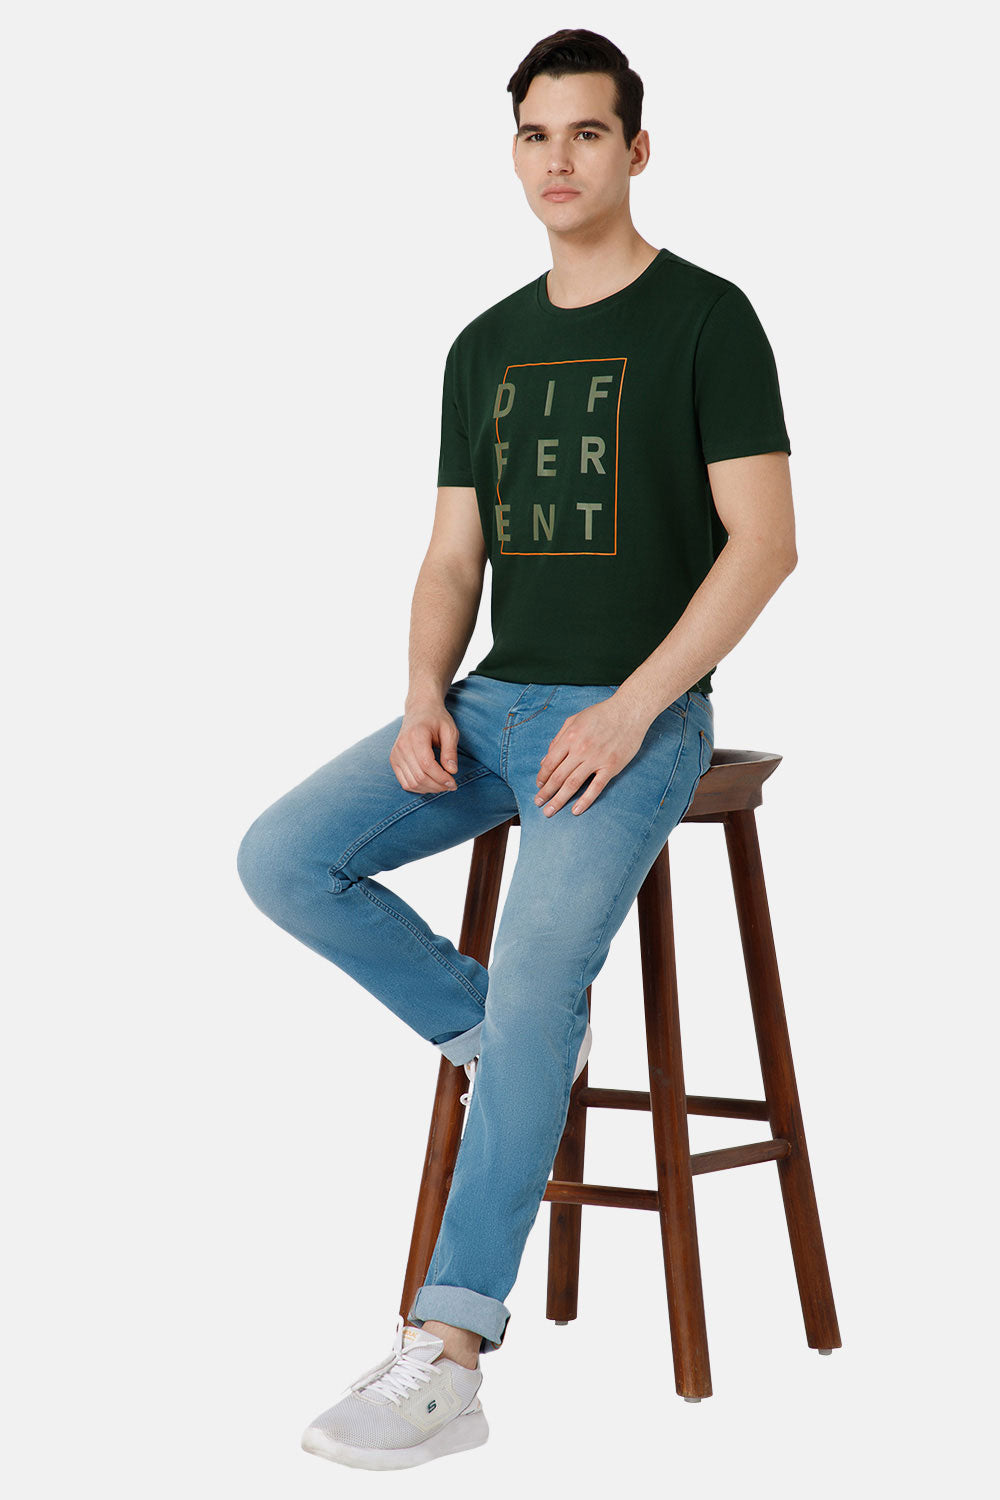 Enhance Printed Crew Neck Men's Casual T-Shirts - Green - TS35